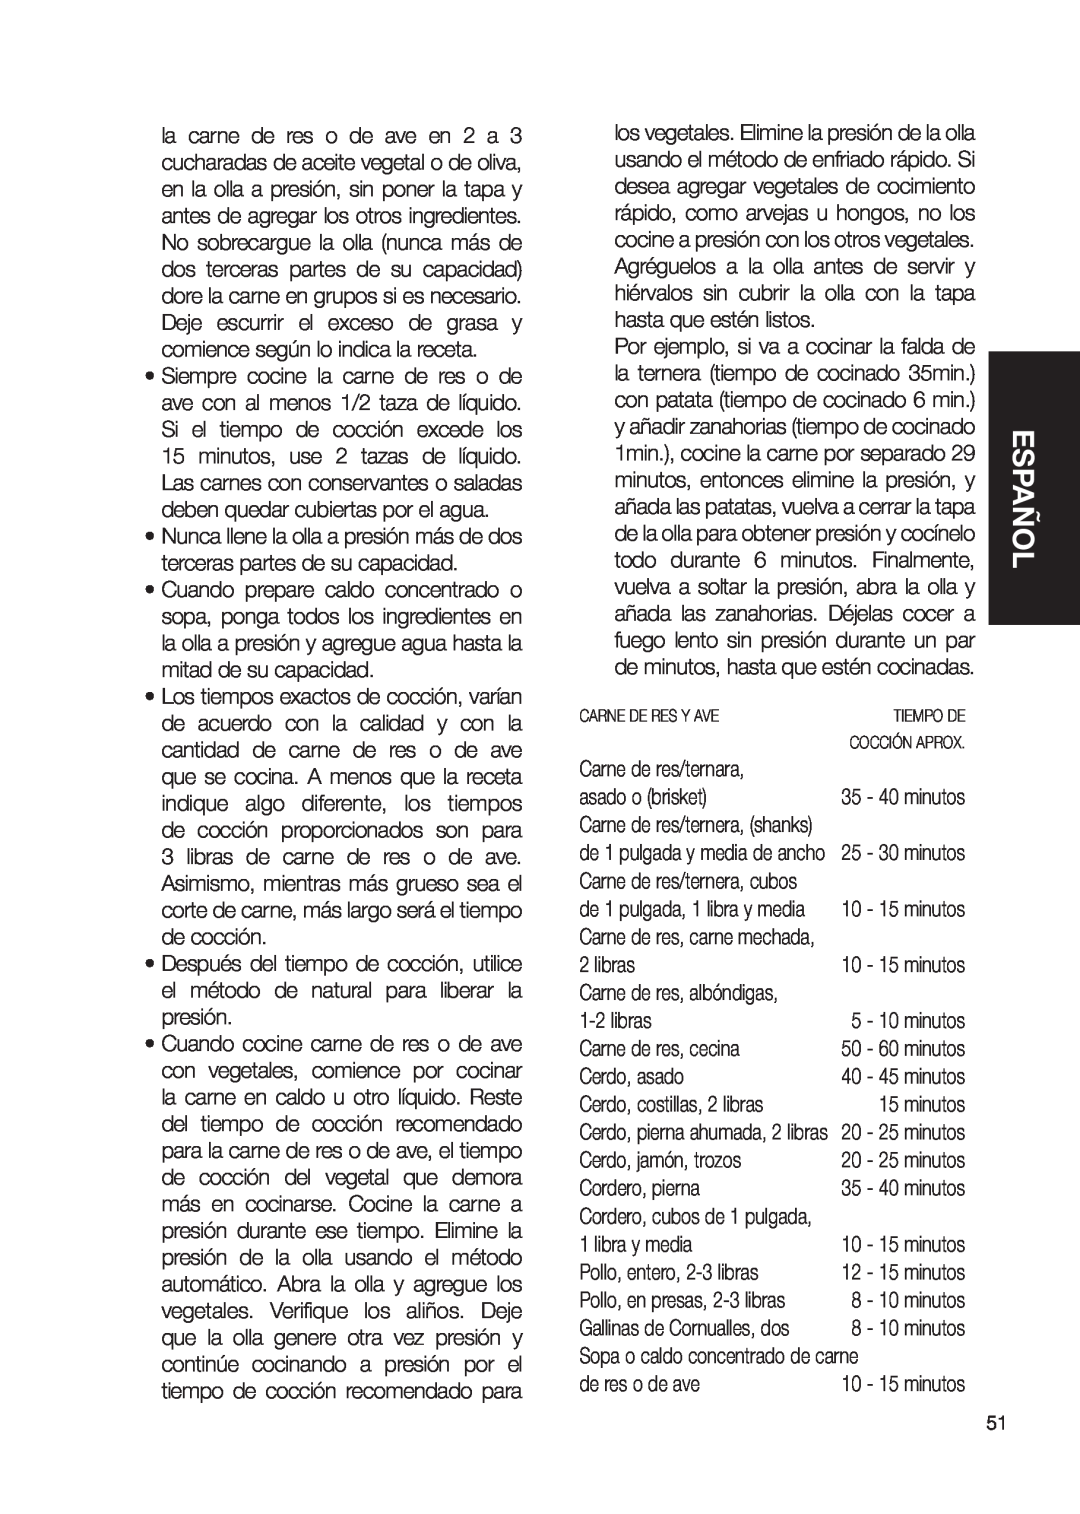 Fagor America Fagor Rapida Pressure Cooker user manual Español, Carne de res/ternara 